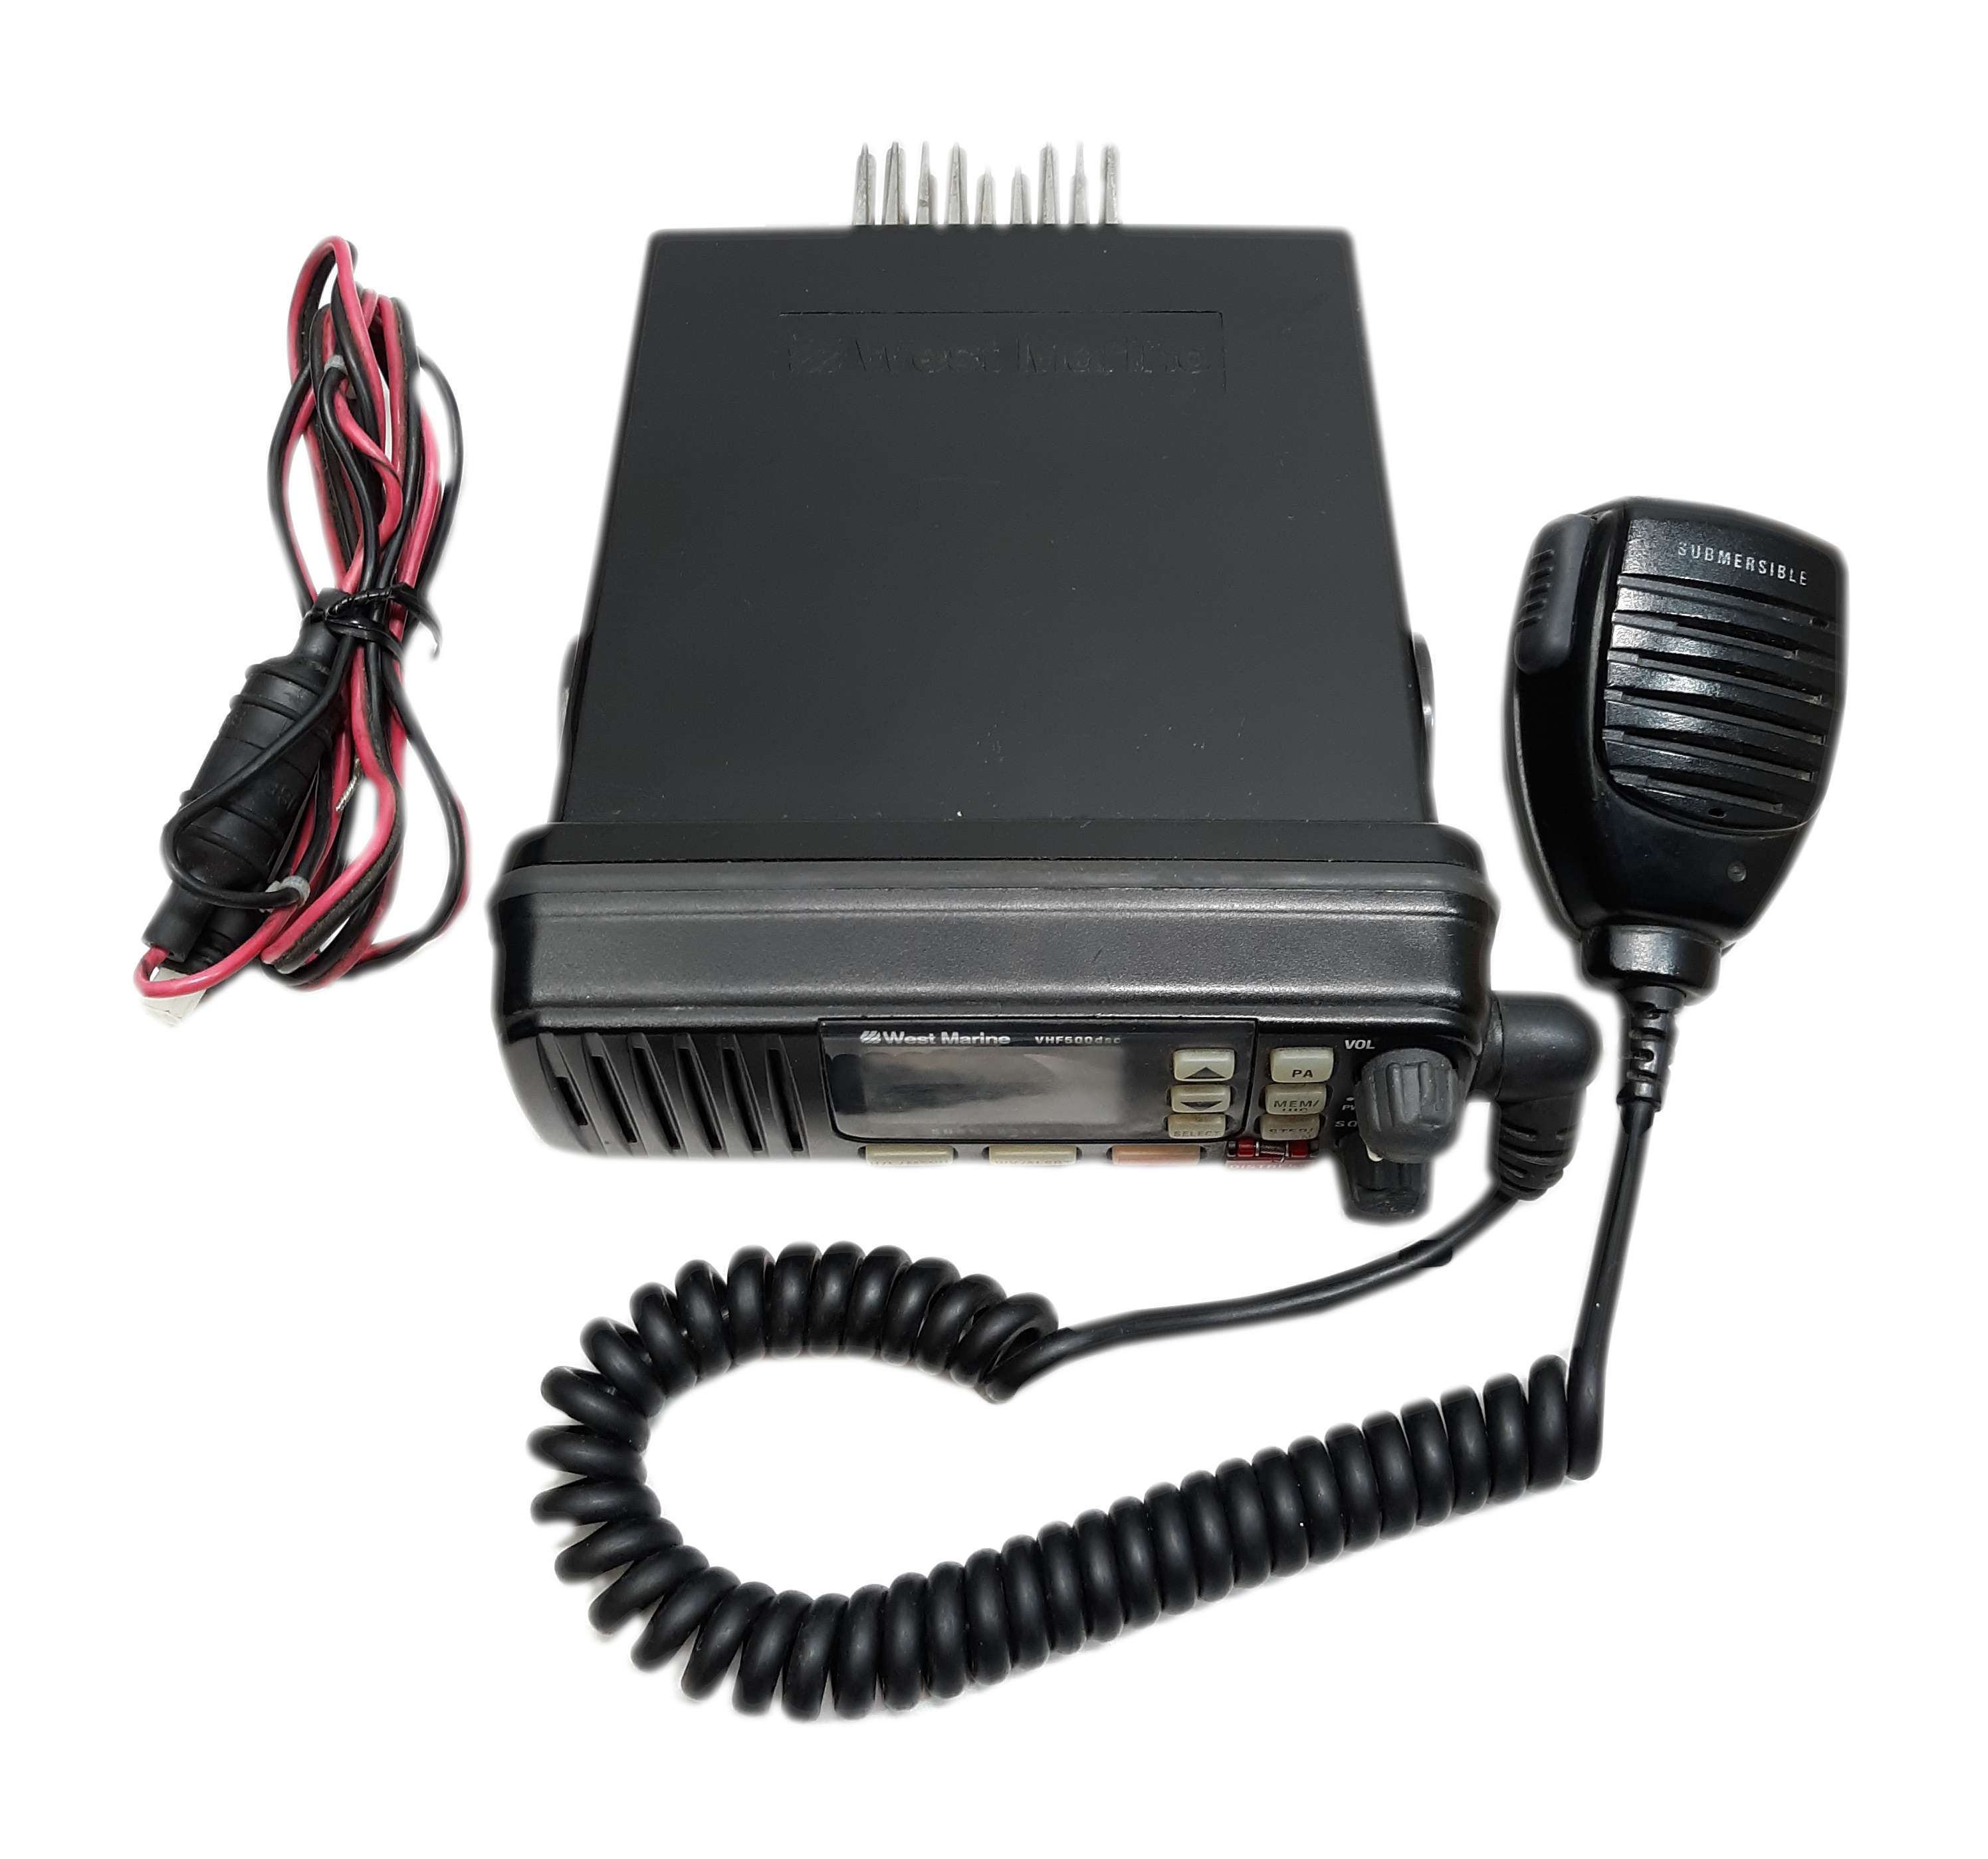 West Marine VHF500 DSC Fixed Mount Radio (Black)